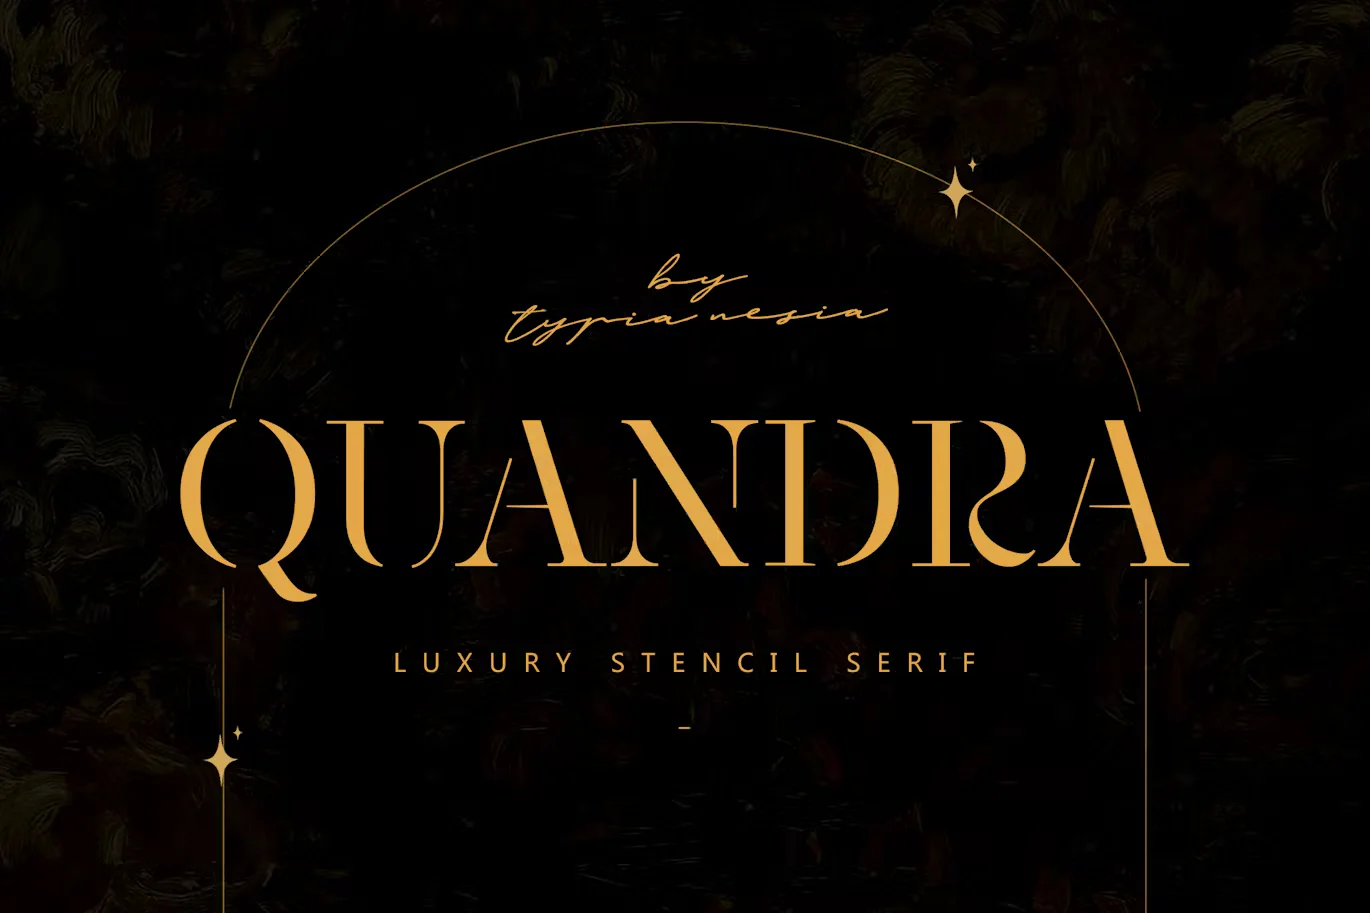 Quandra - Luxury Stencil Serif